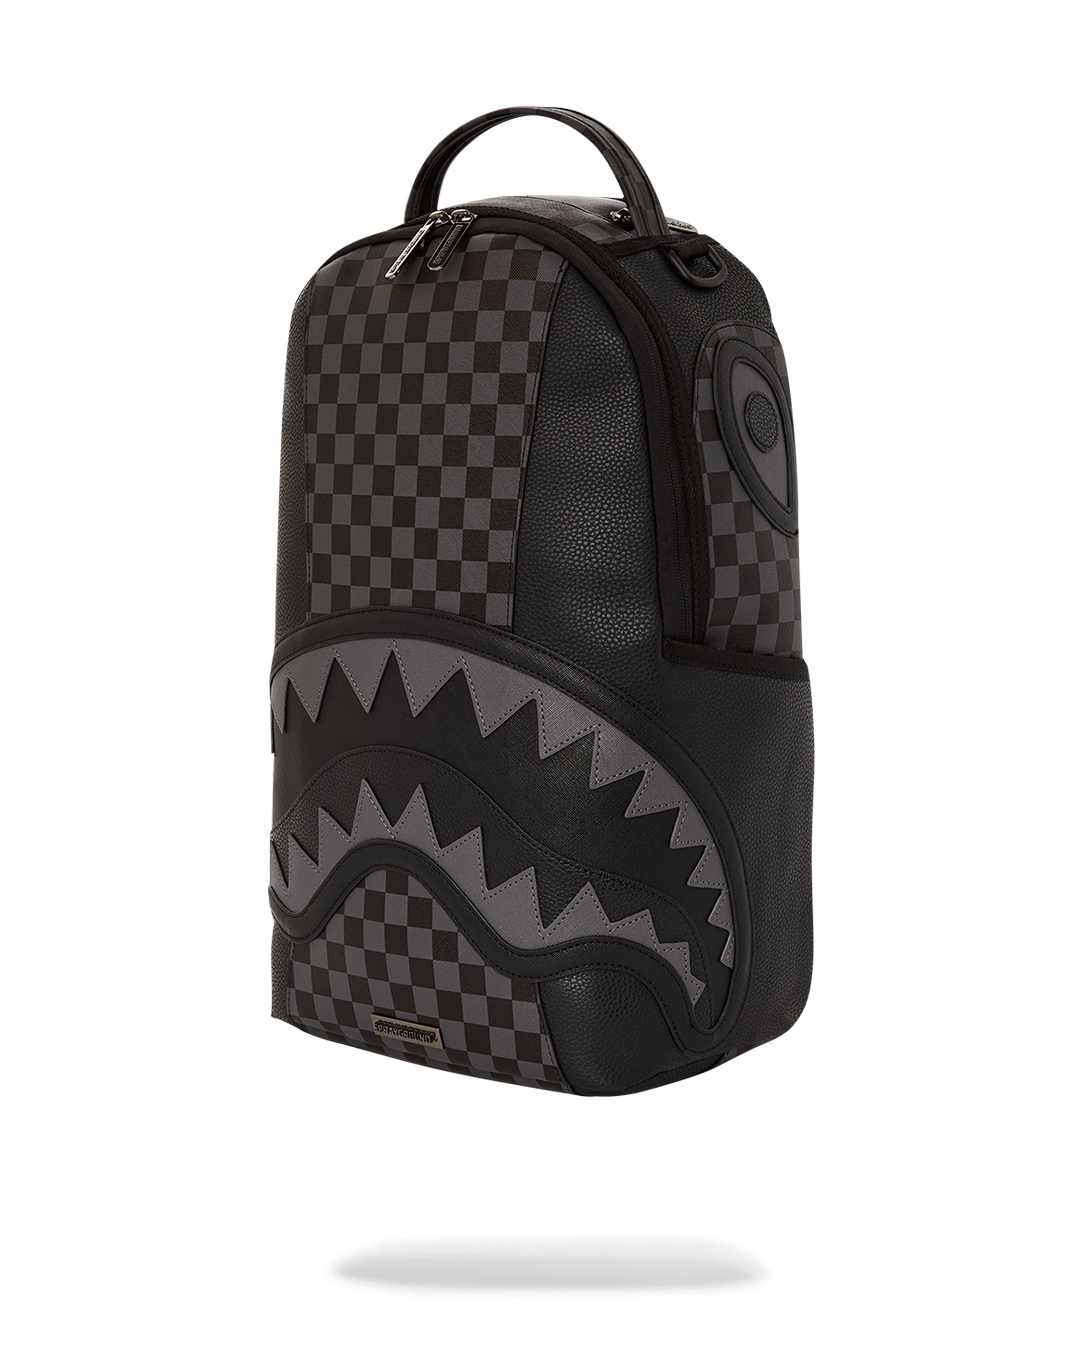 SPRAYGROUND: backpack for man - Black  Sprayground backpack 910B5493NSZ  online at